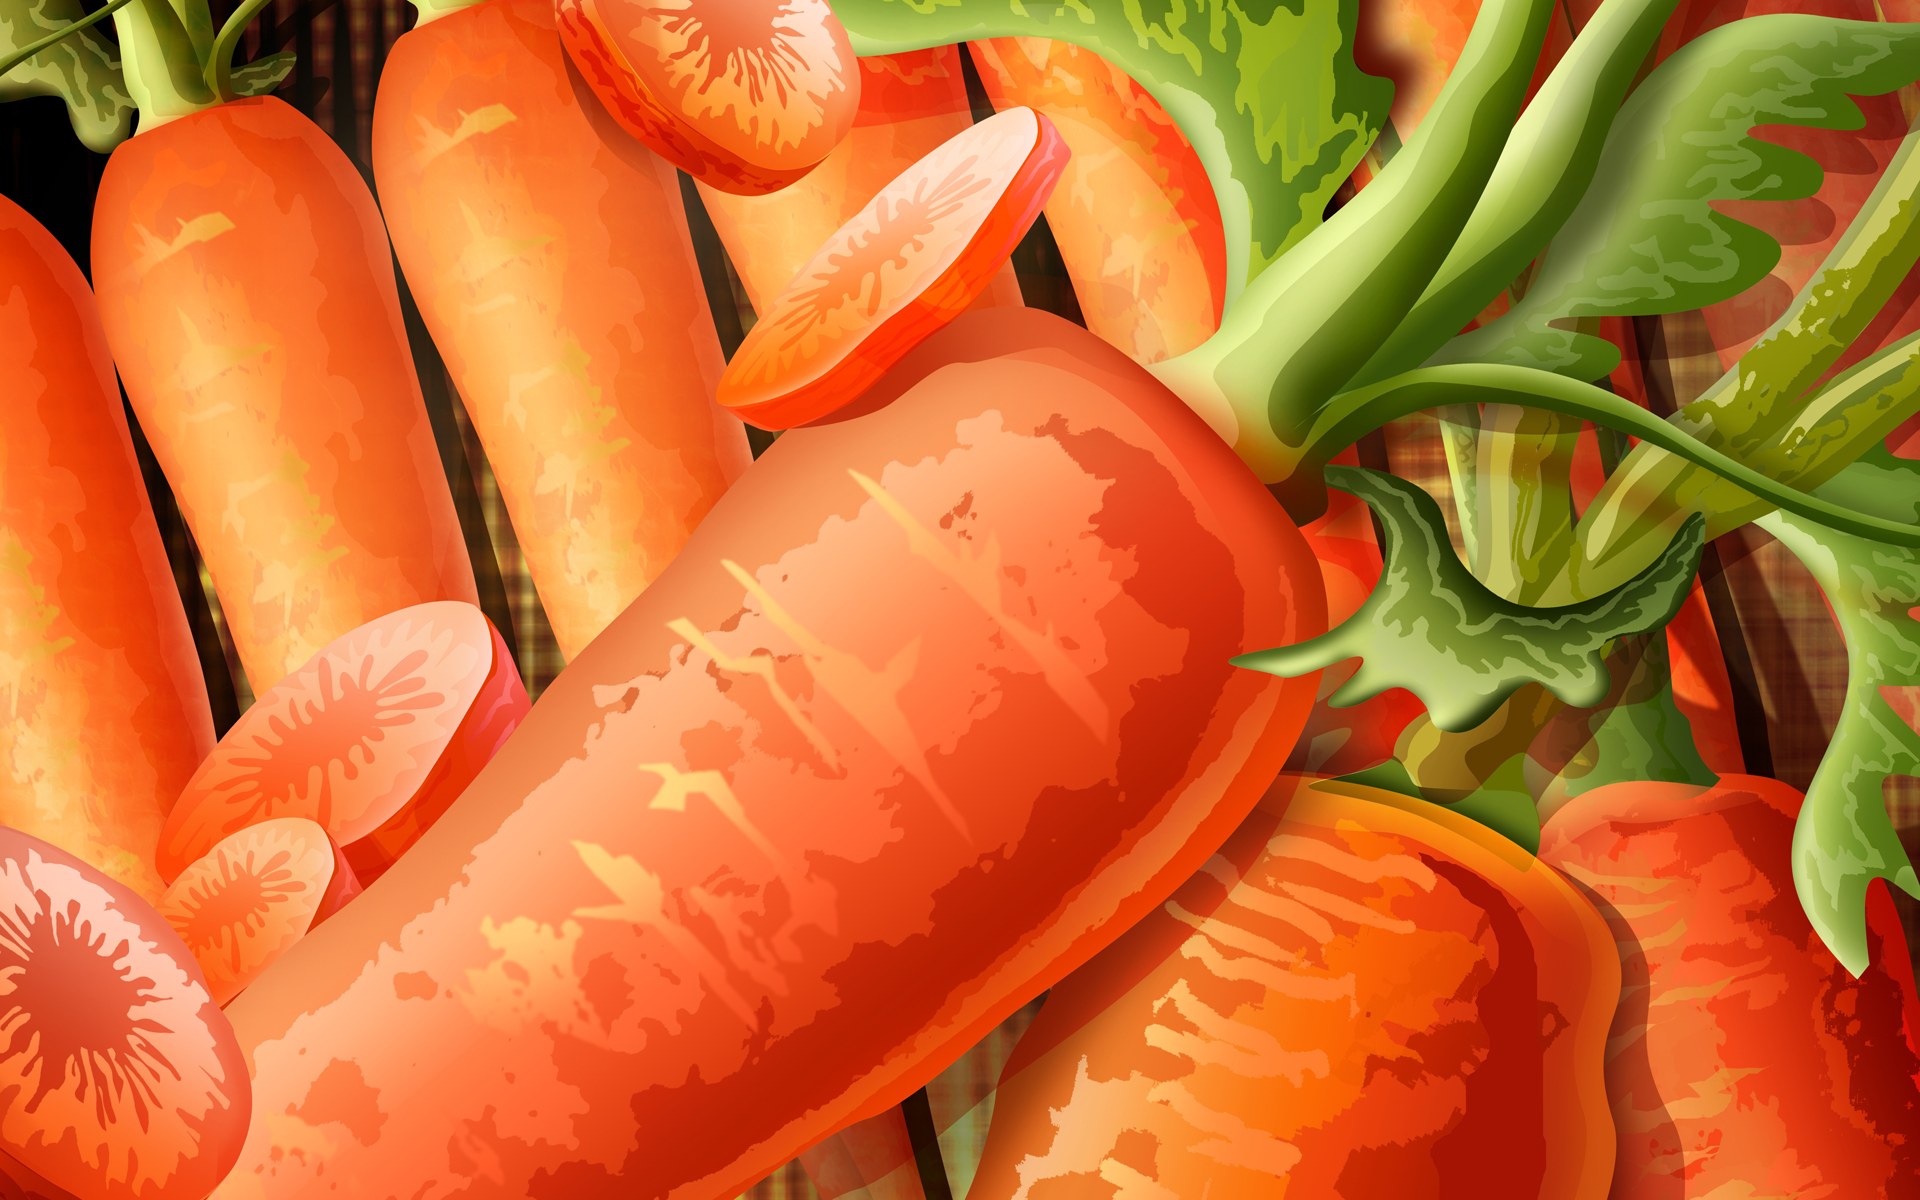 Psd Food Illustrations Fresh Carrot Illustration